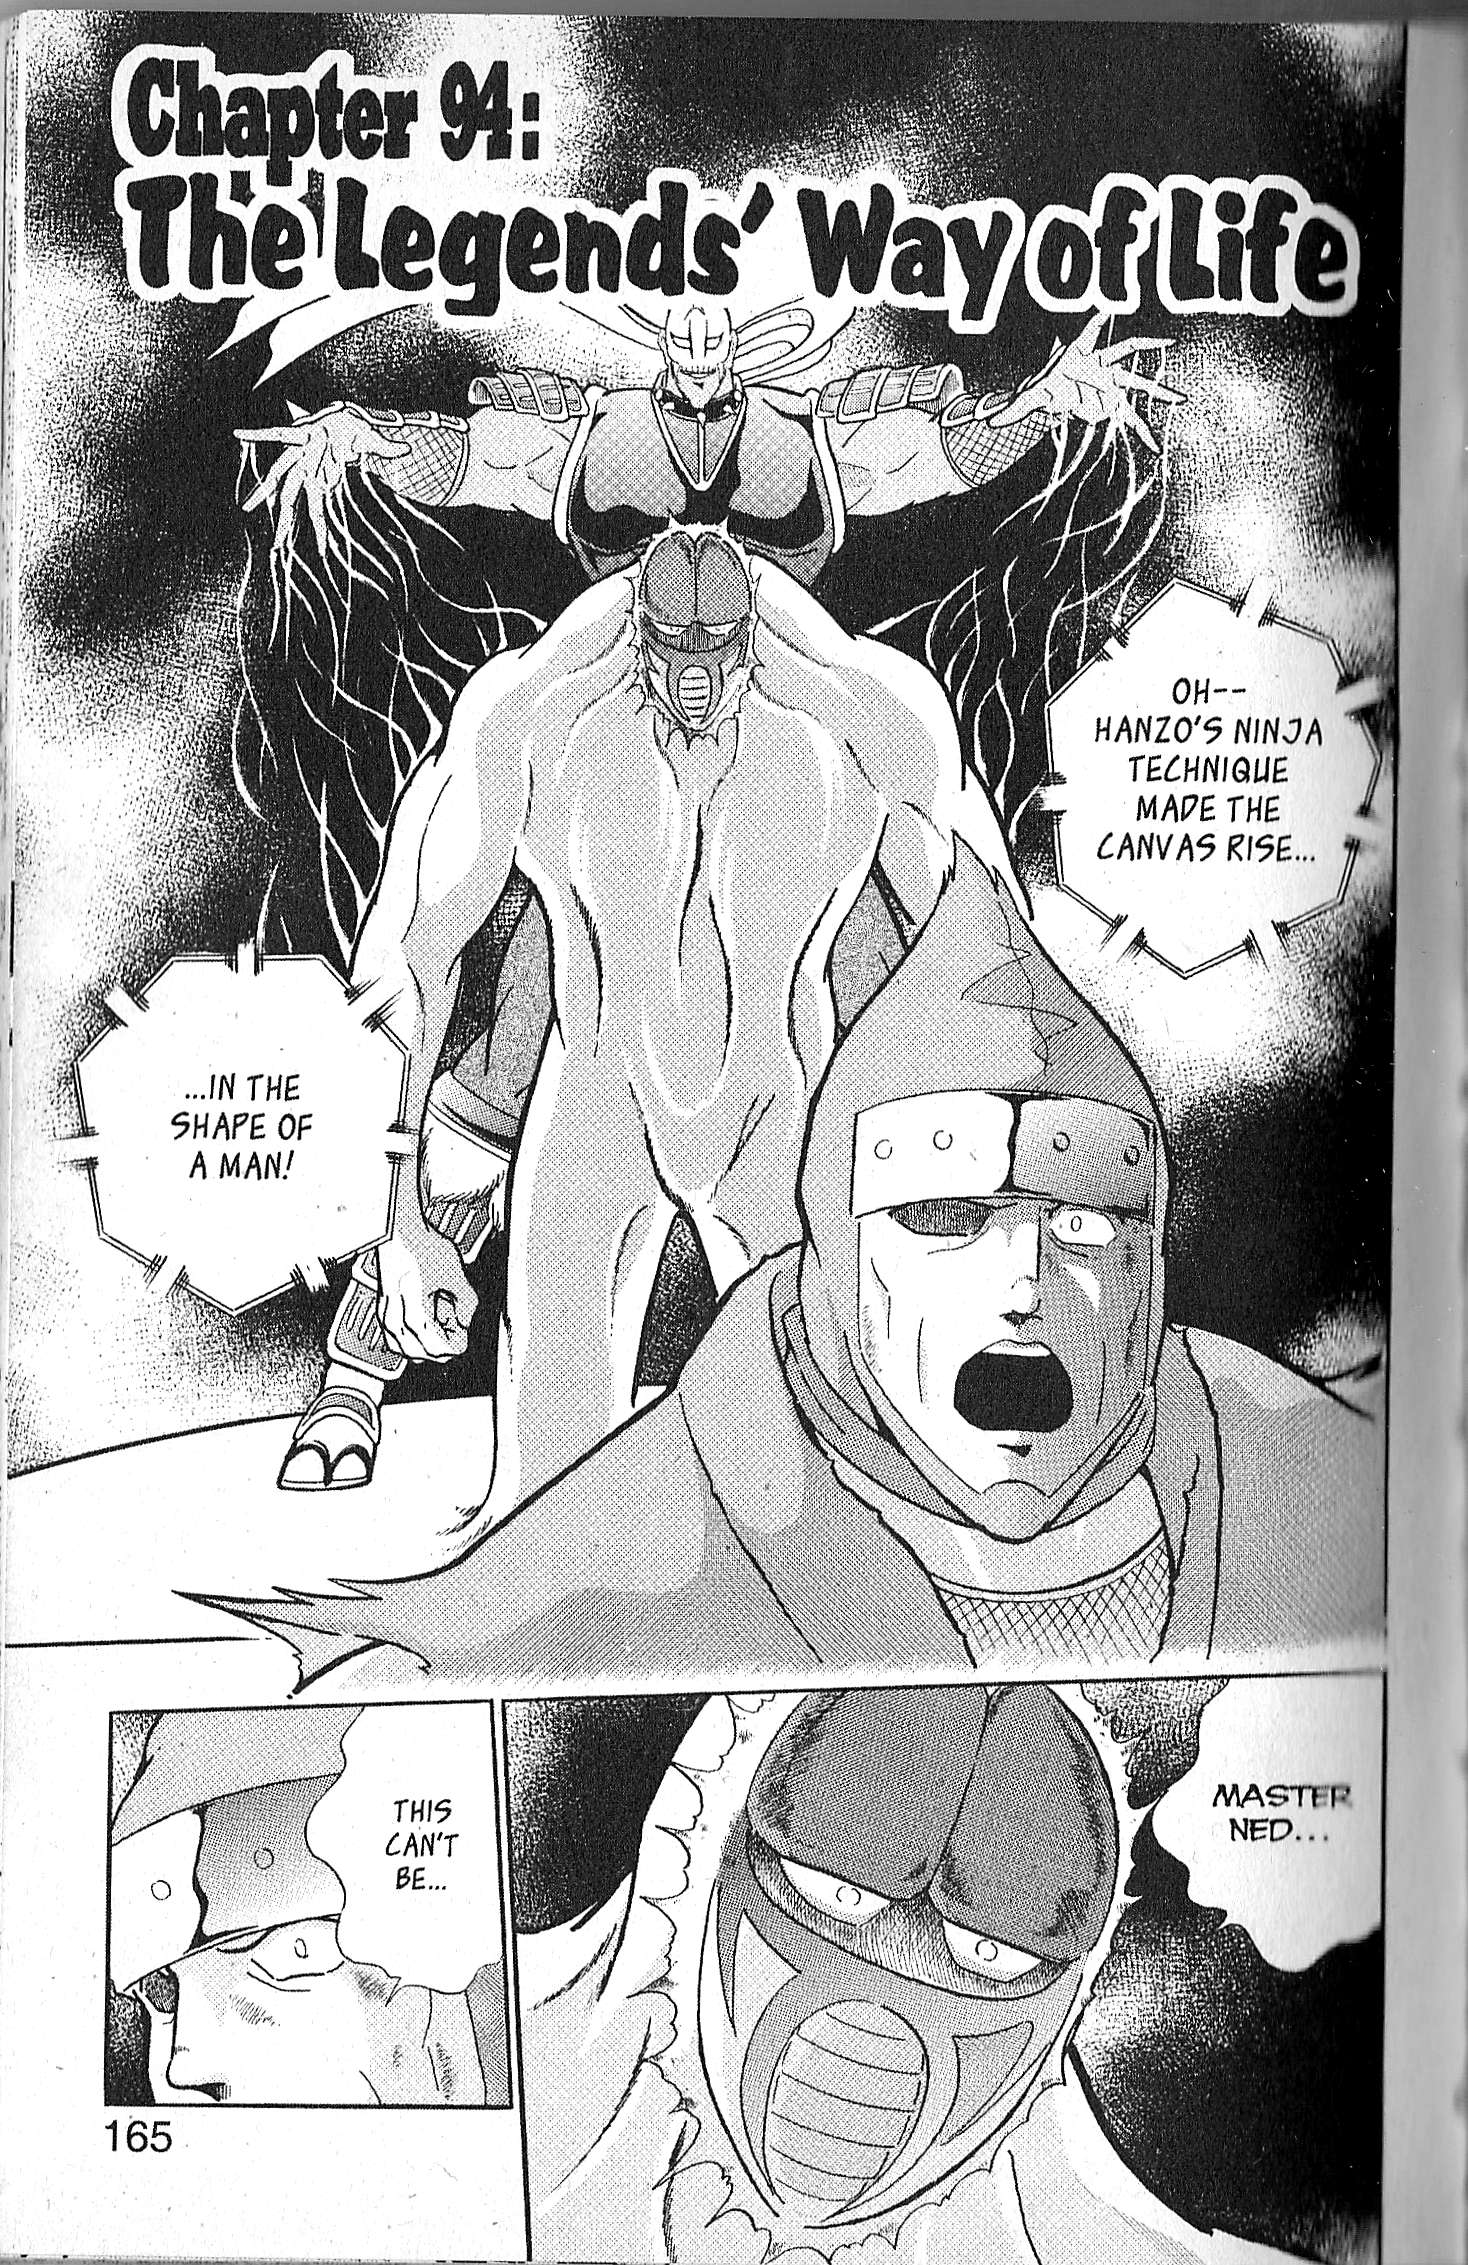 Kinnikuman II Sei - 2nd Generation - chapter 94 - #1